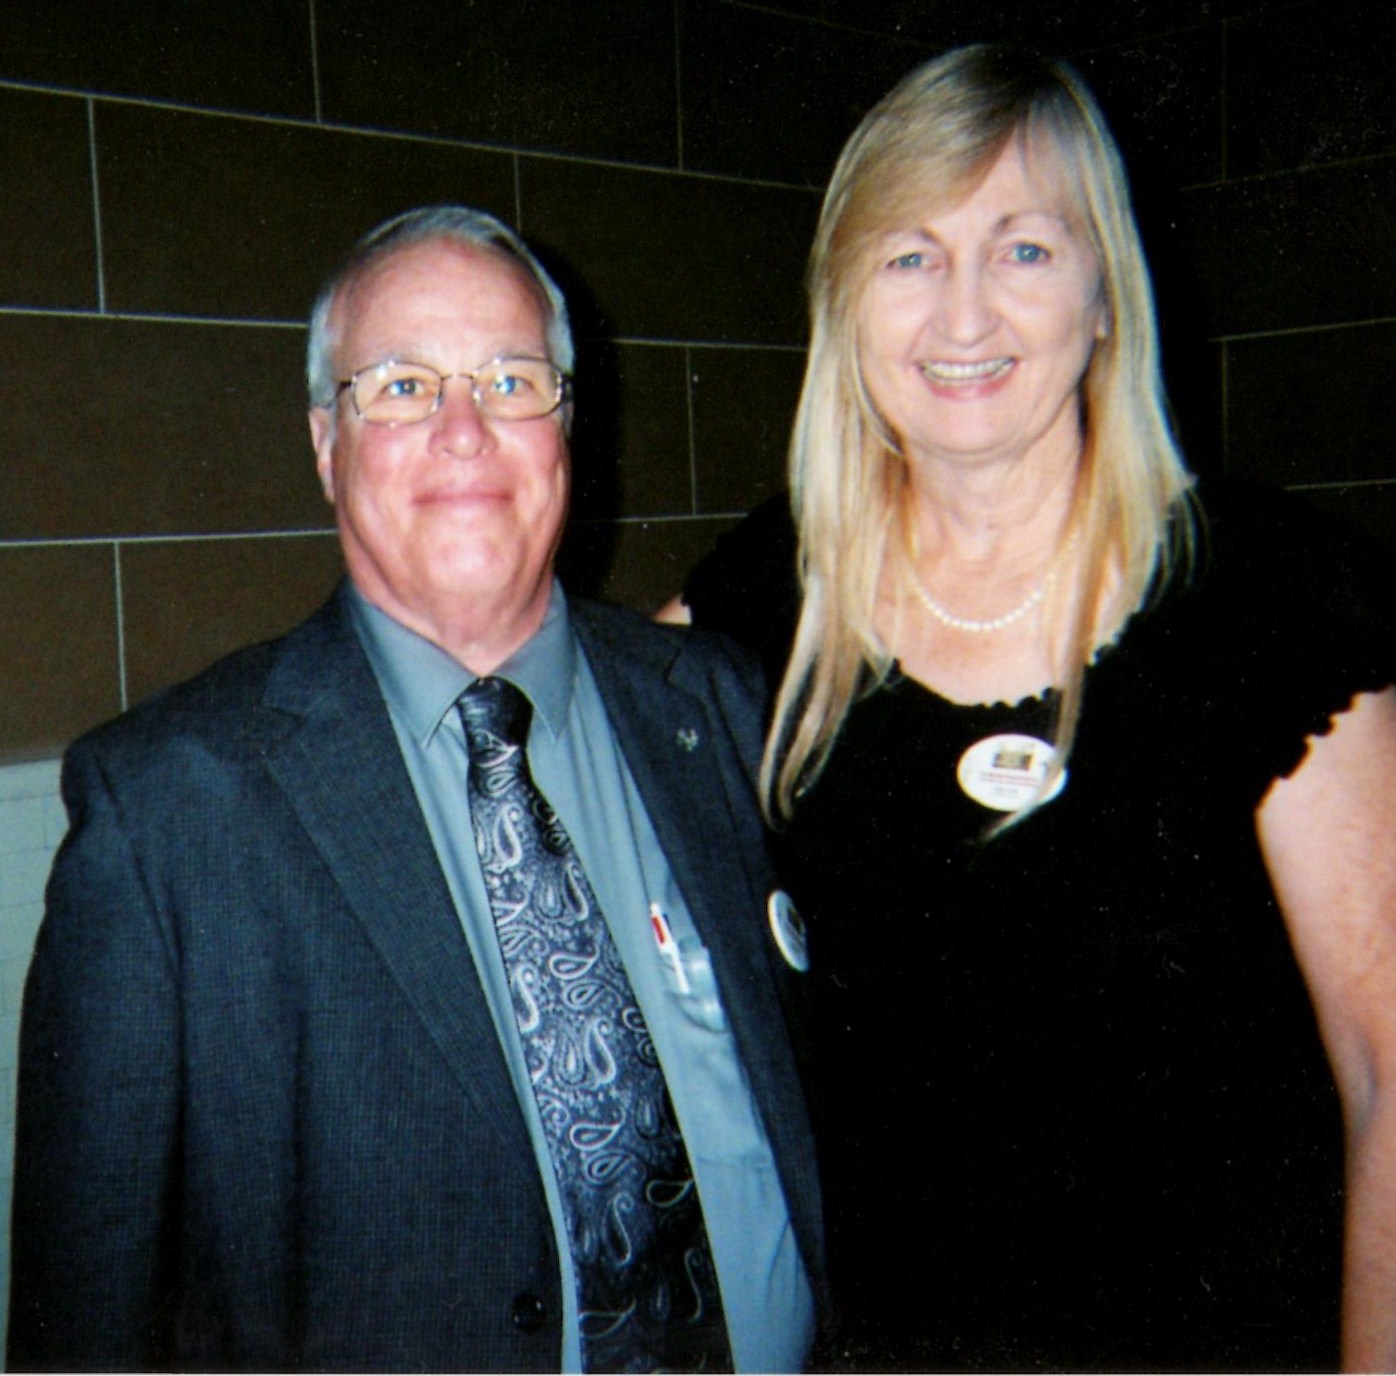 Kelly Hope and Martha Bolton at the dedication of the Bob Hope Memorial Library at Ellis Island, 2010